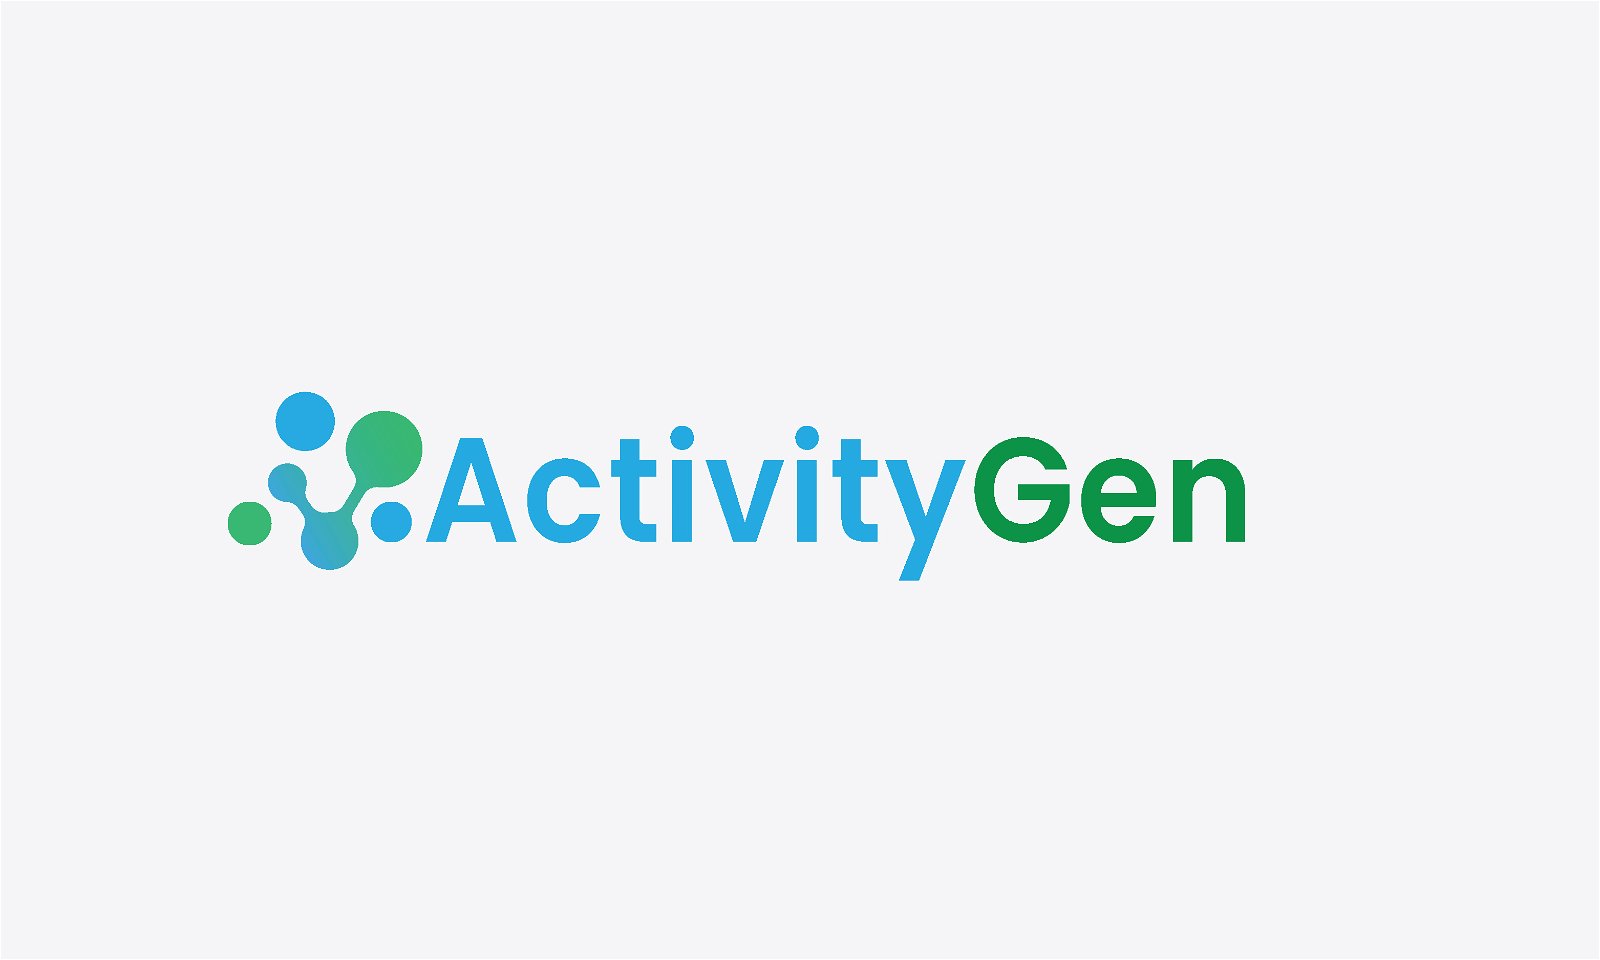 ActivityGen.com - Creative brandable domain for sale